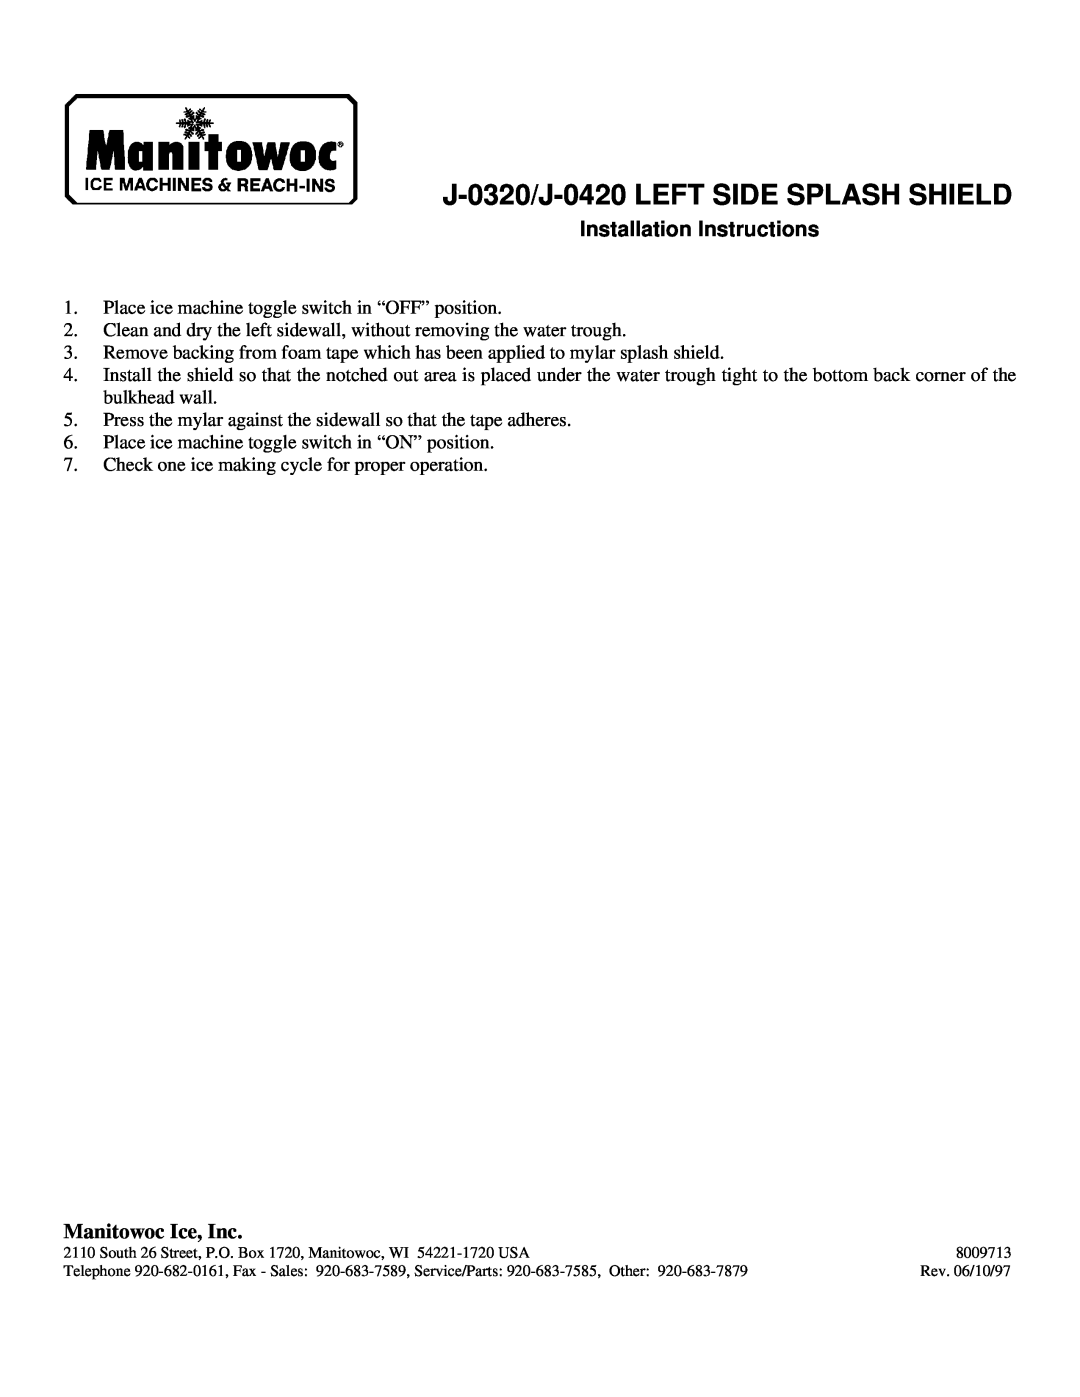 Manitowoc Ice installation instructions J-0320/J-0420LEFT SIDE SPLASH SHIELD, Installation Instructions 